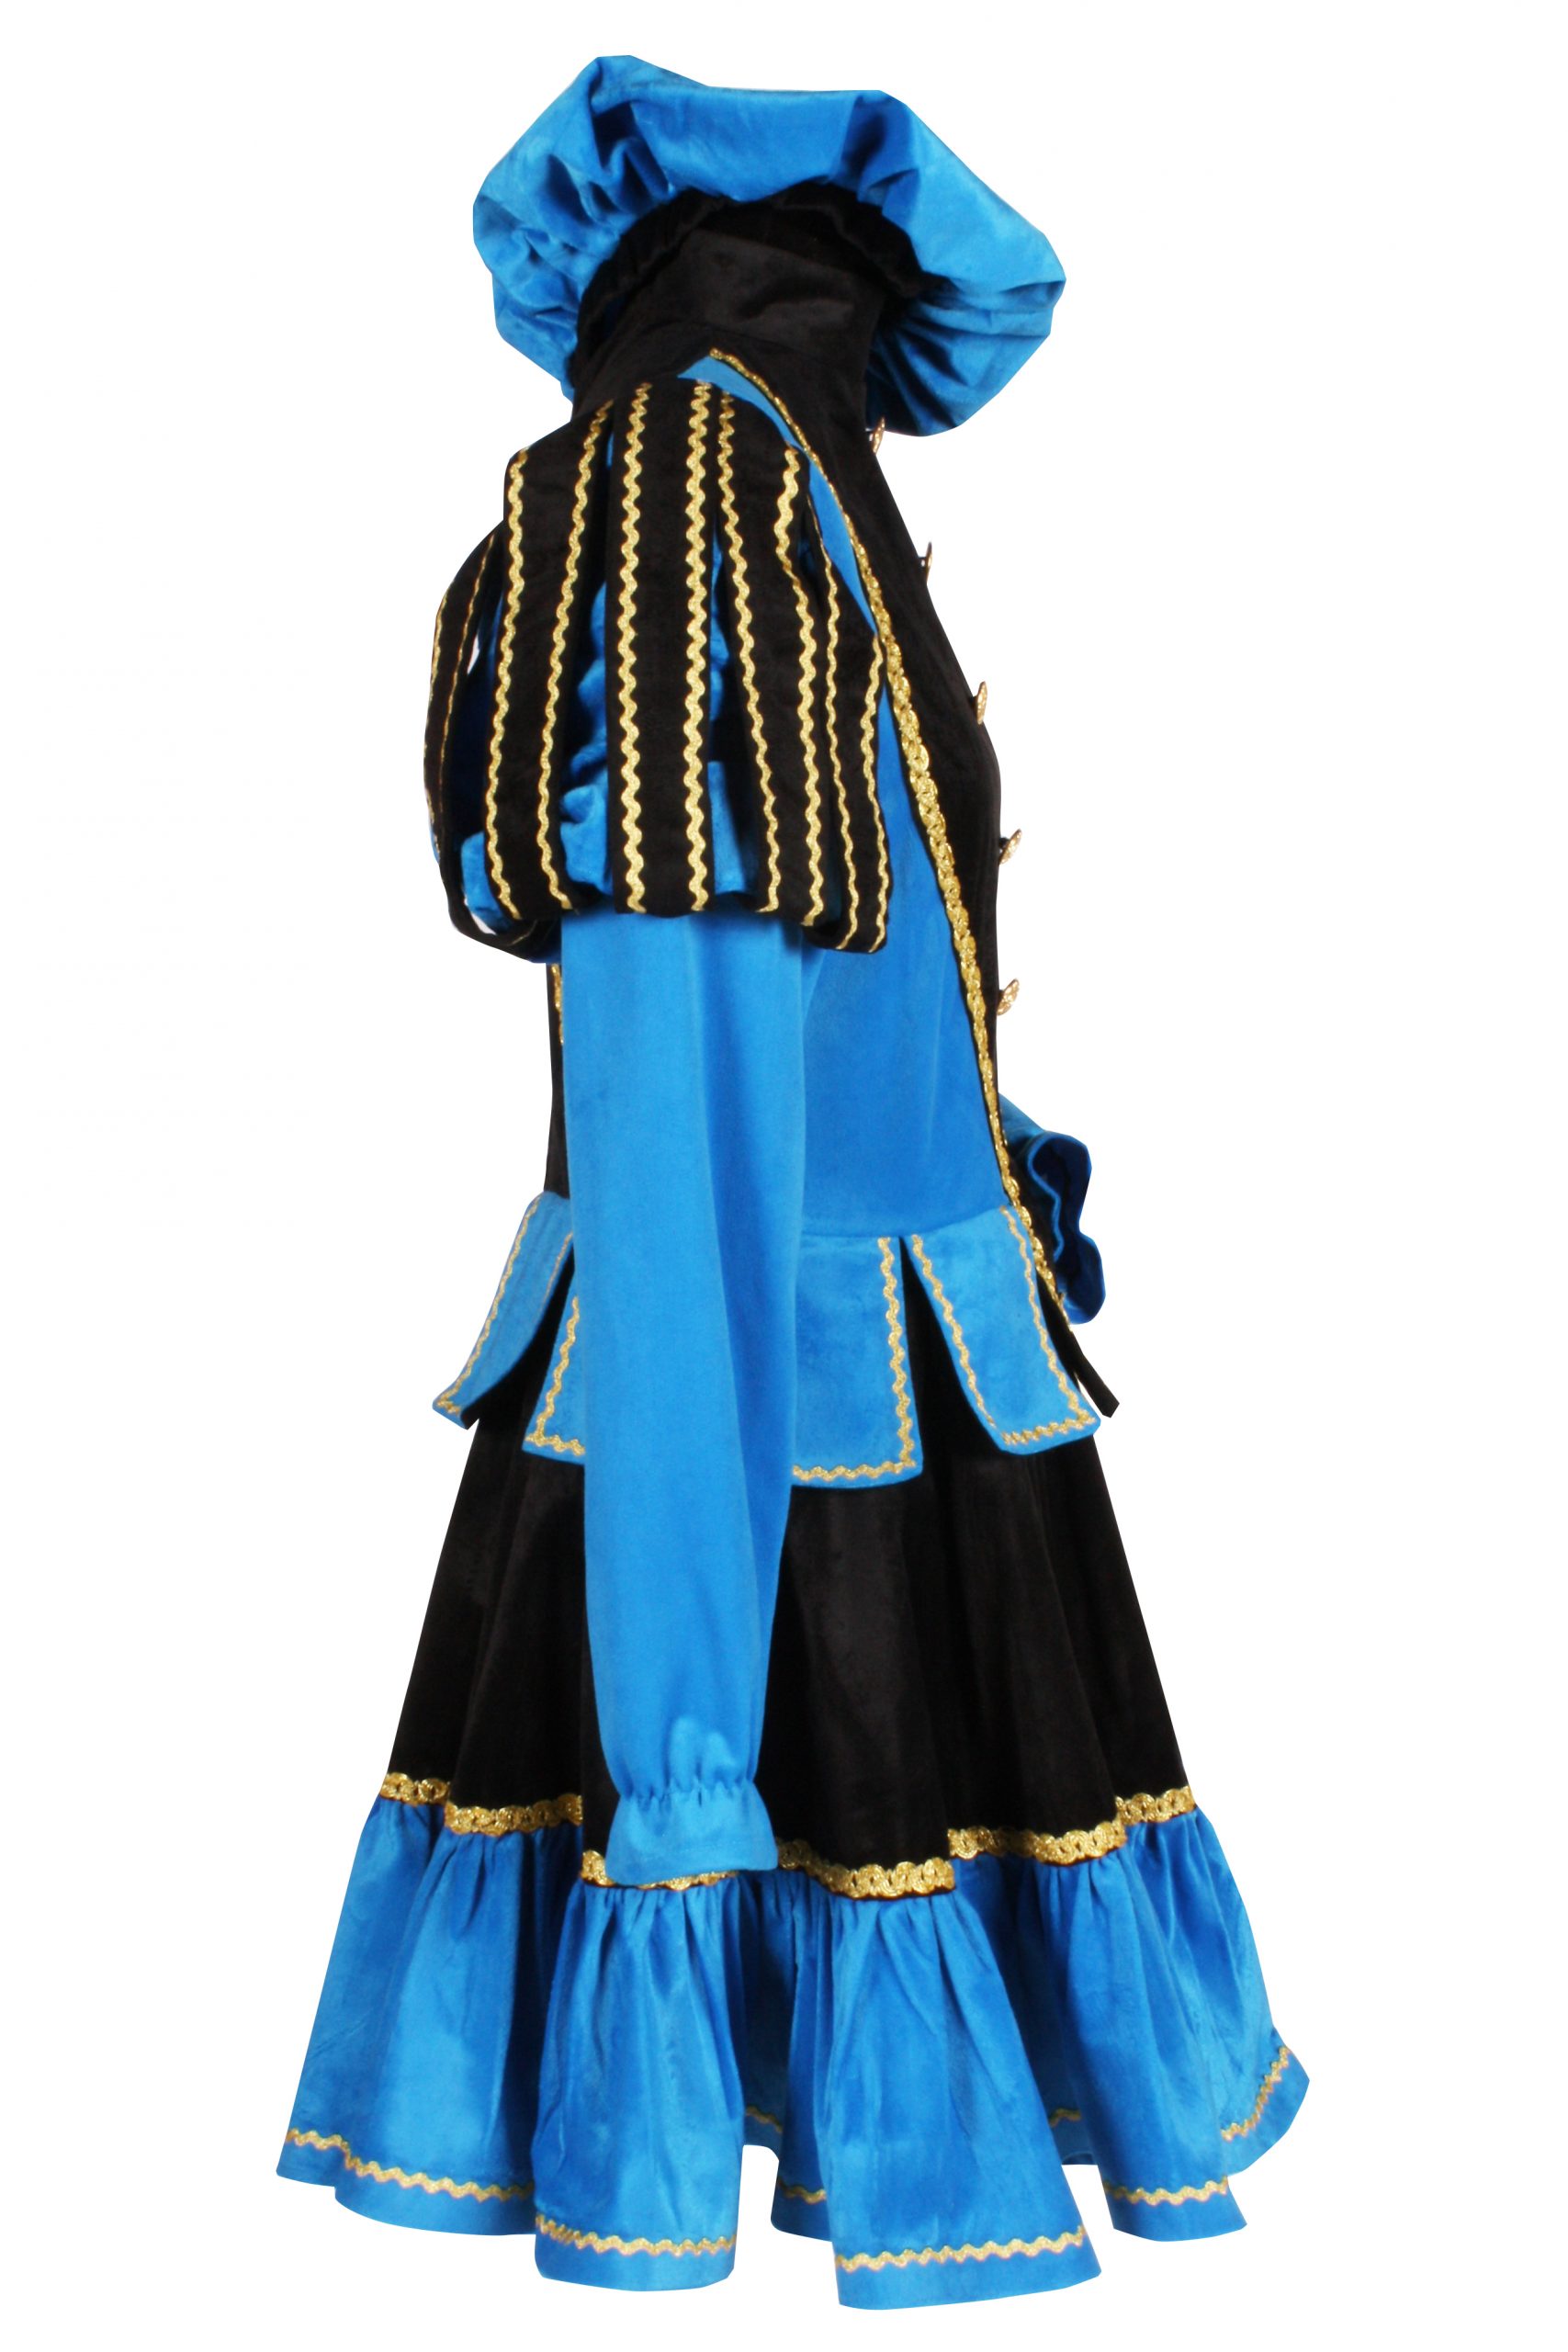 Jurk Damespiet Murcia Turquoise/Zwart